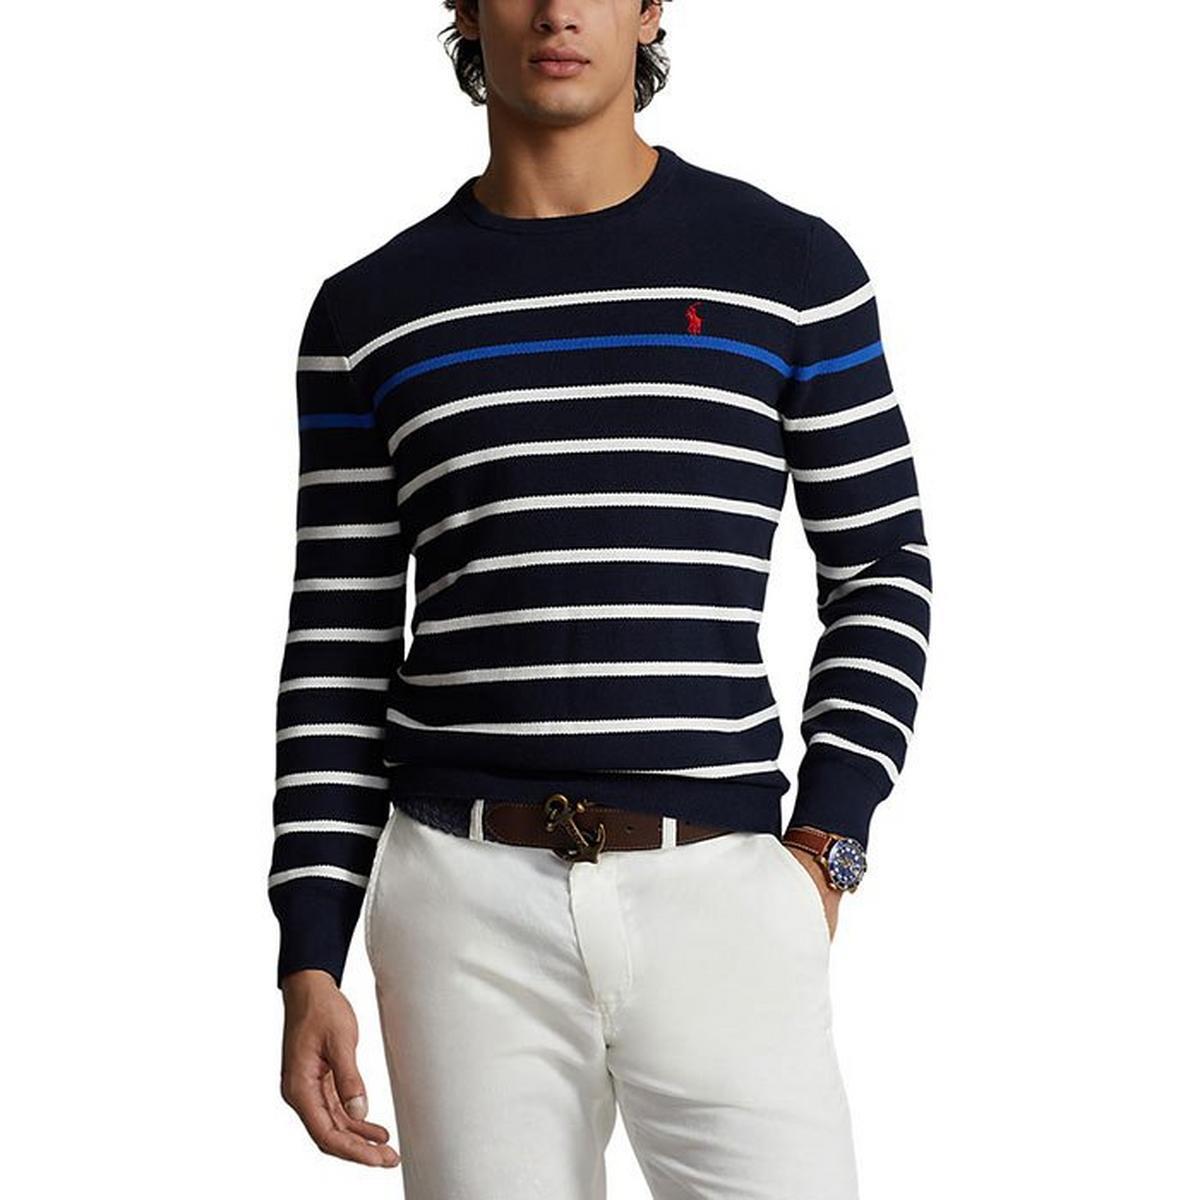 Men's Striped Mesh-Knit Cotton Sweater